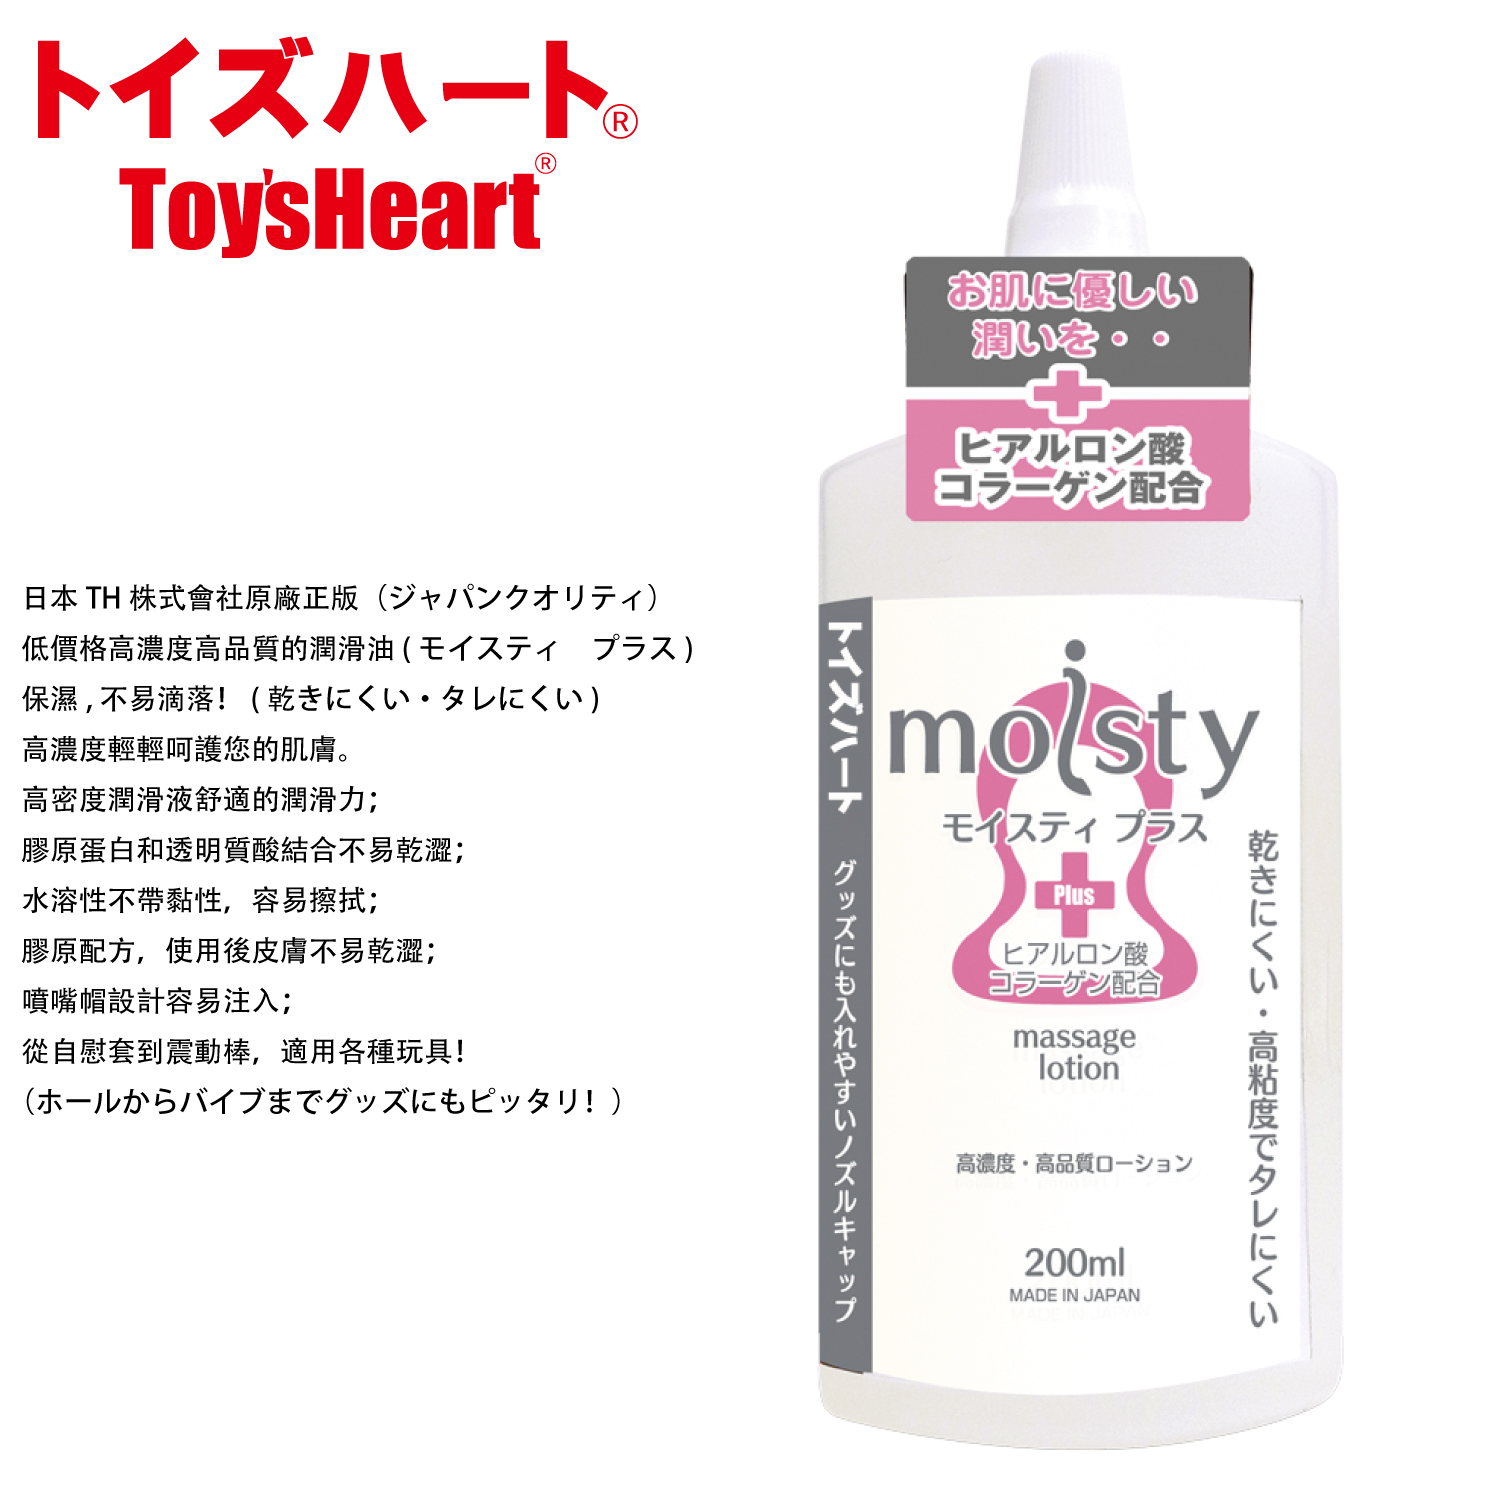 Toys Heart｜Moisty Plus 润滑液 - 200ml